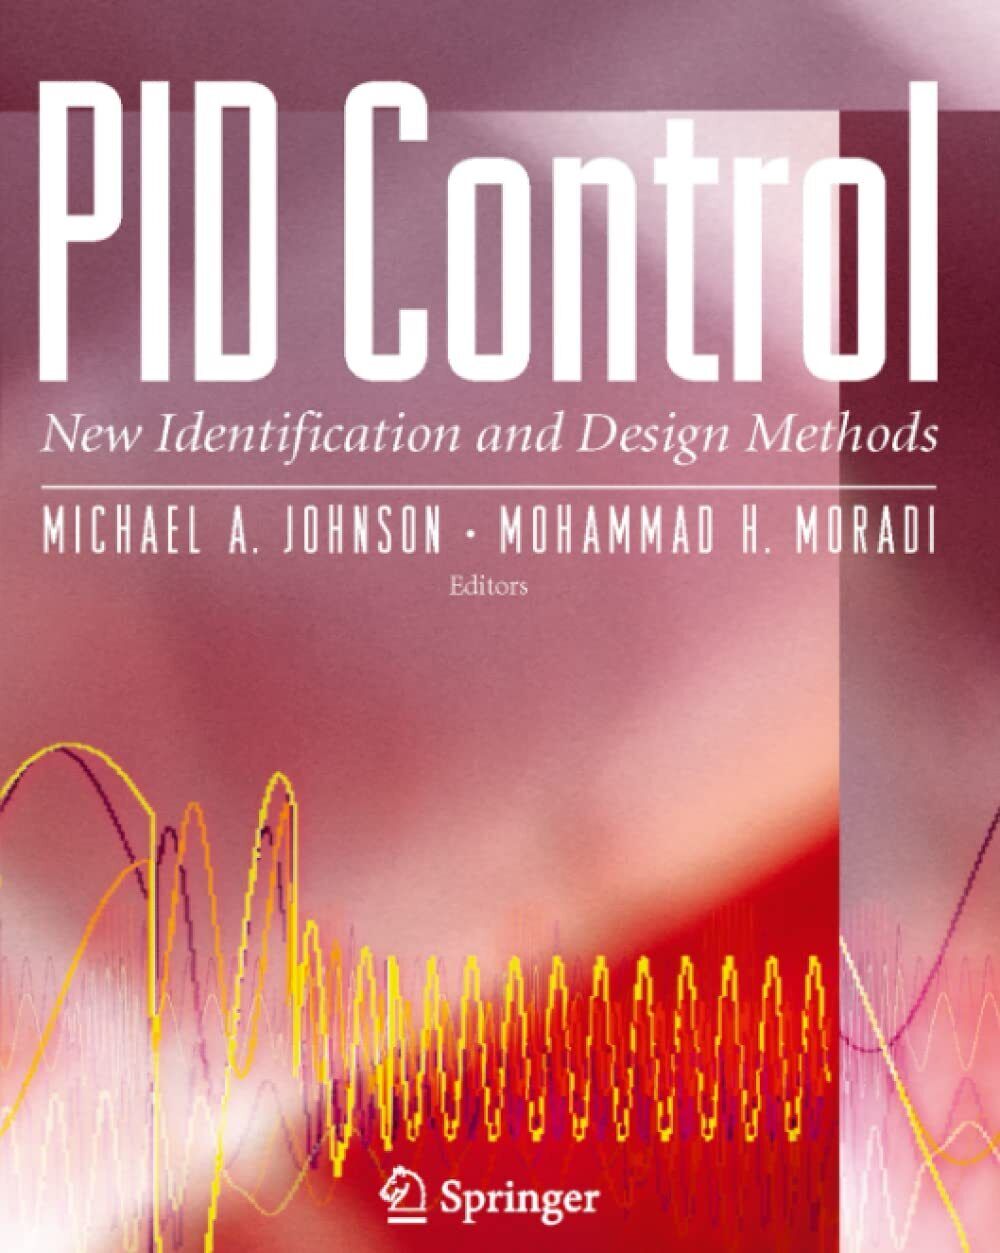 PID Control - Michael A Johnson - Springer, 2010